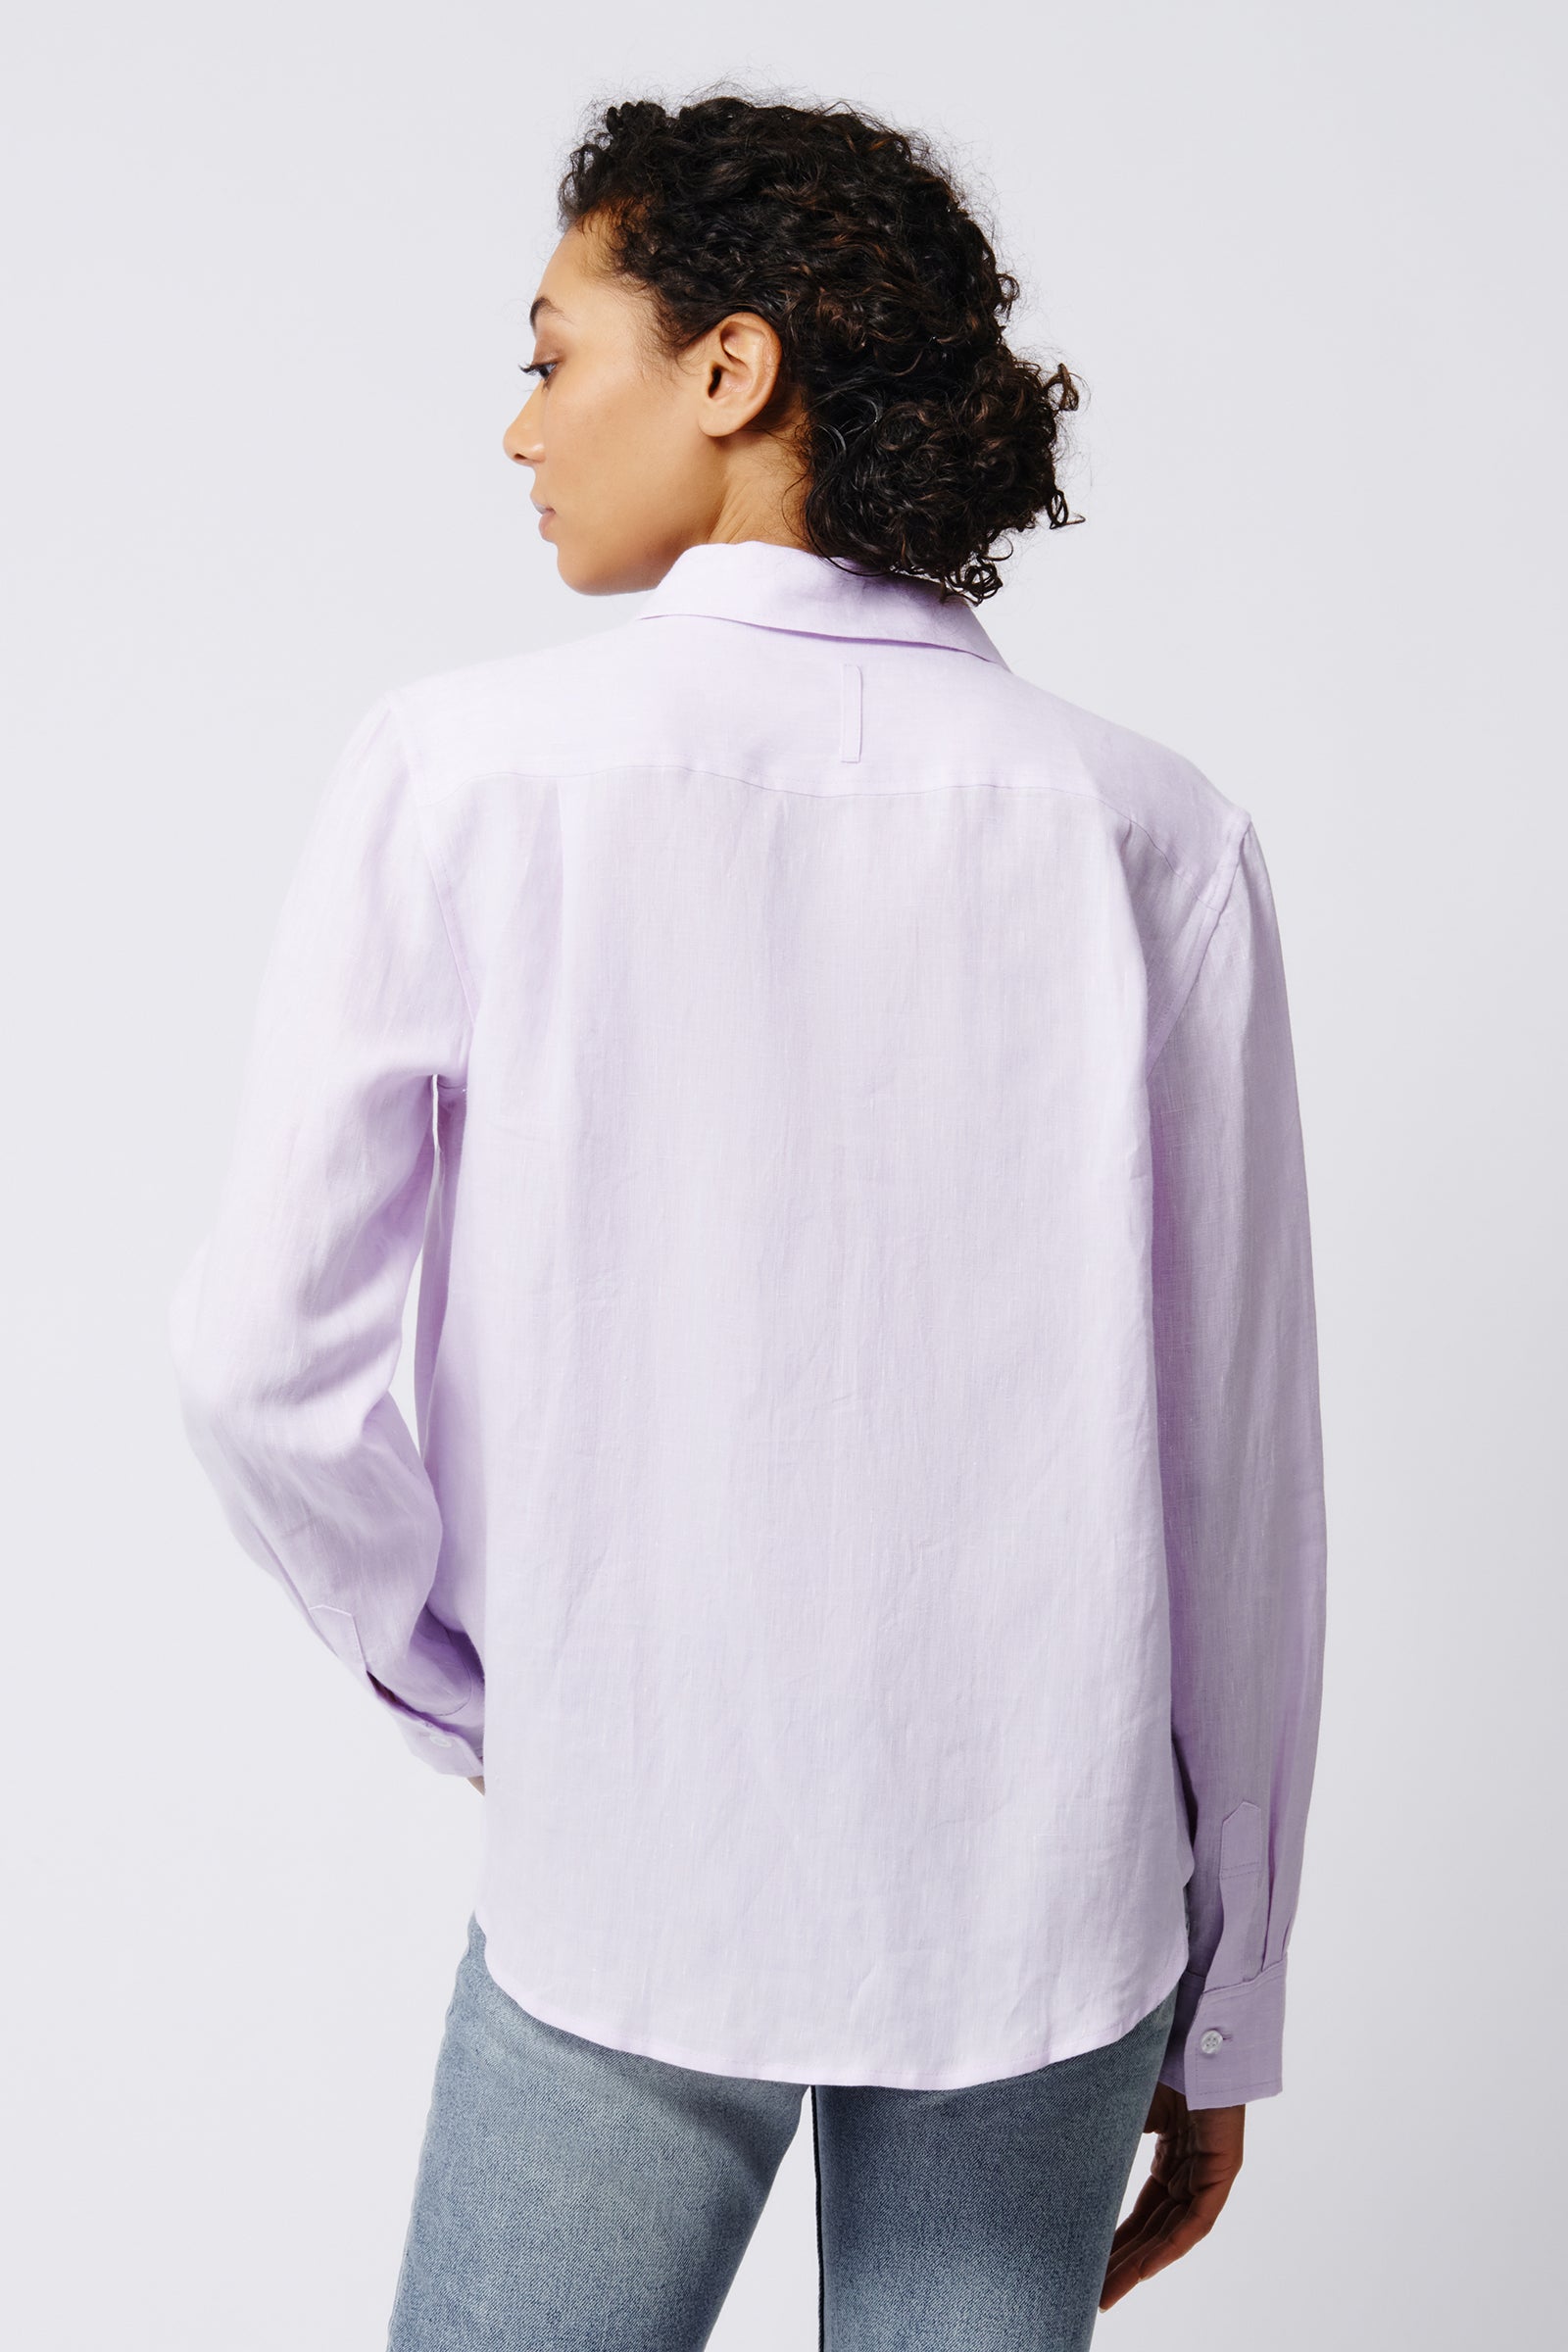 Kal Rieman Summer Shirt in Lavender on Model Back View Crop